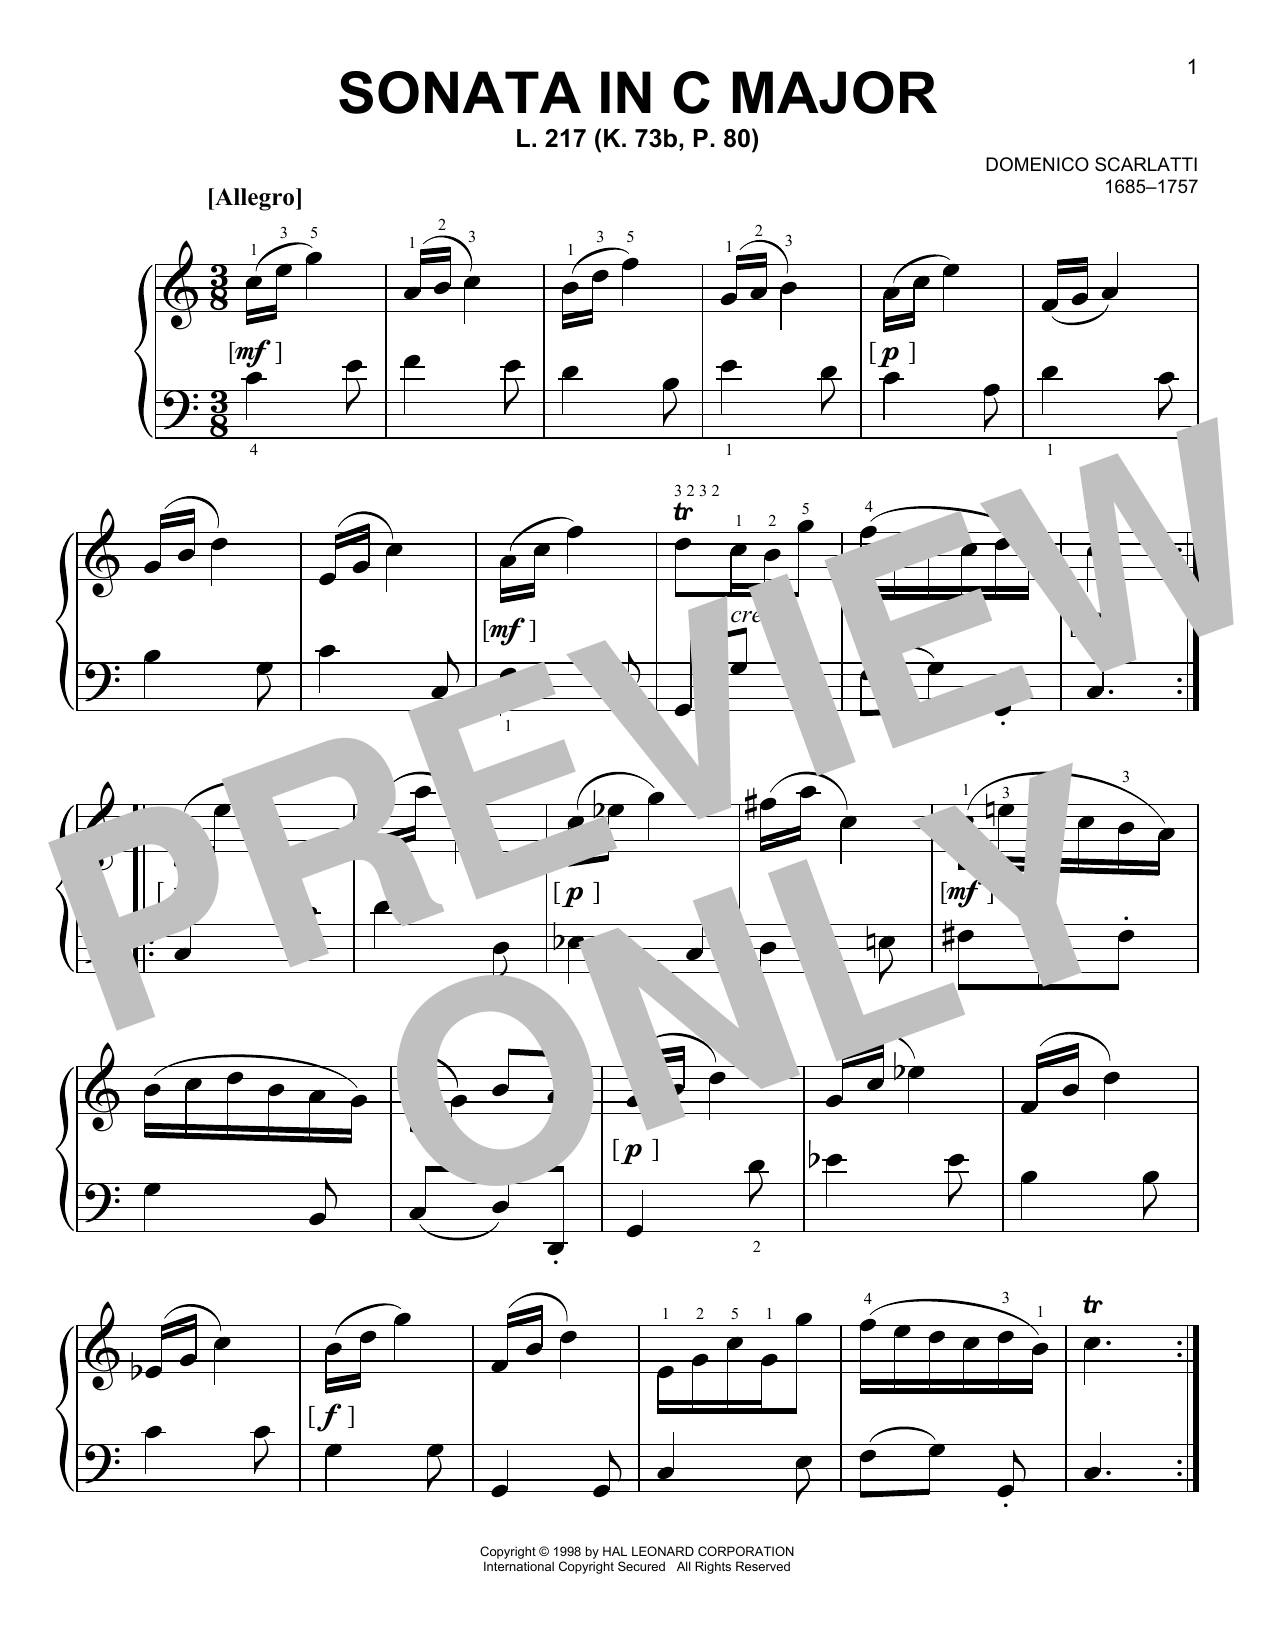 Domenico Scarlatti Sonata In C Major, L. 217 Sheet Music Notes & Chords for Easy Piano - Download or Print PDF